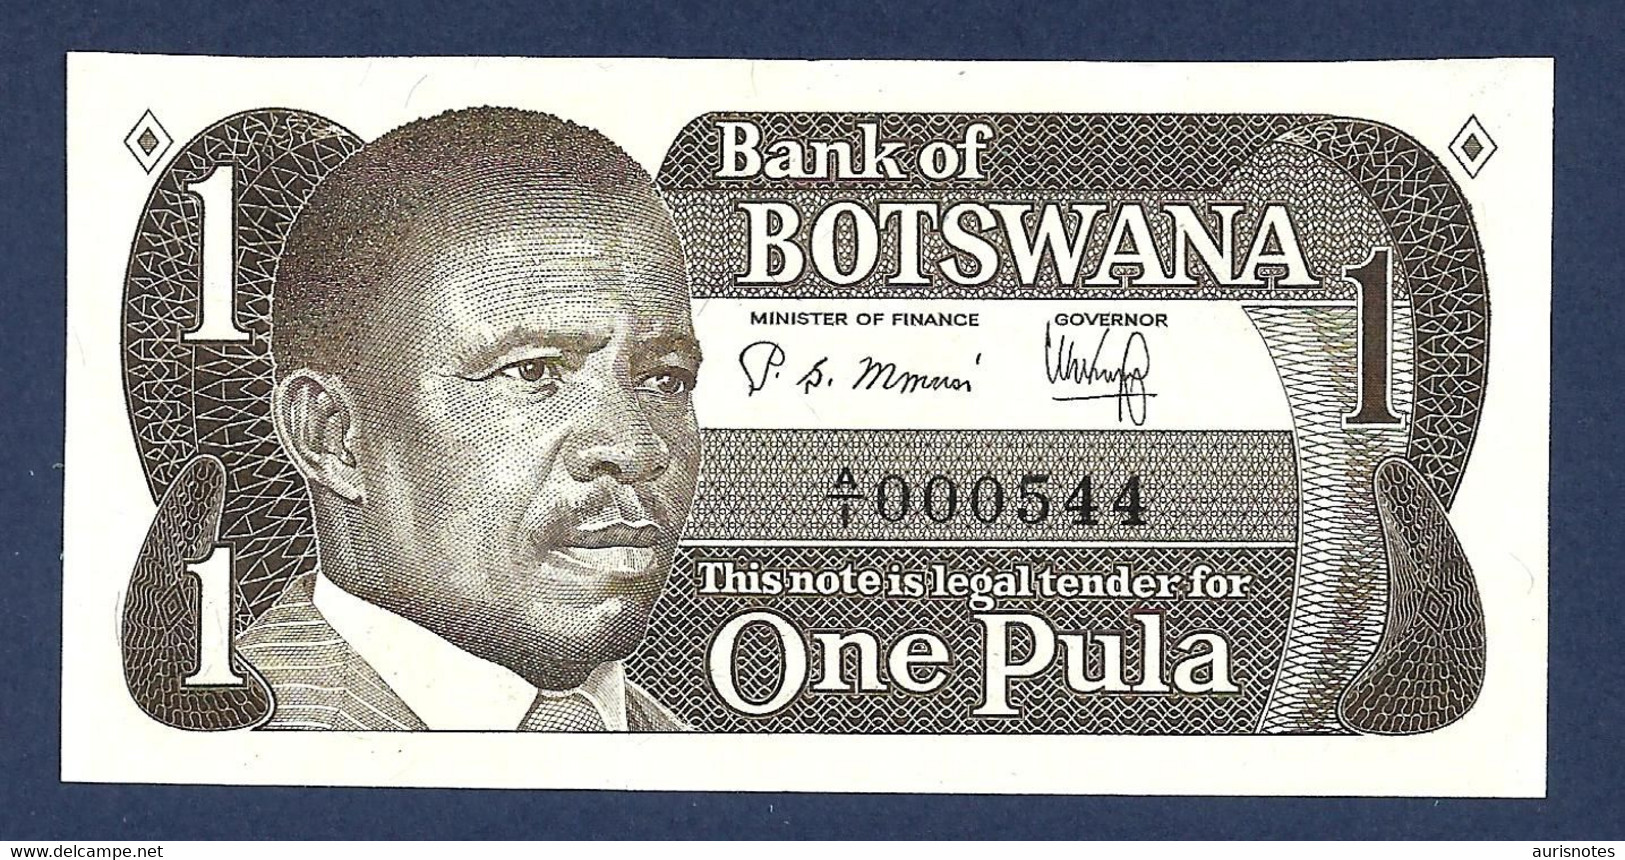 Botswana 1 Pula 1983 P6a Prefix A/1 & Very Low Number 000544 UNC - Botswana